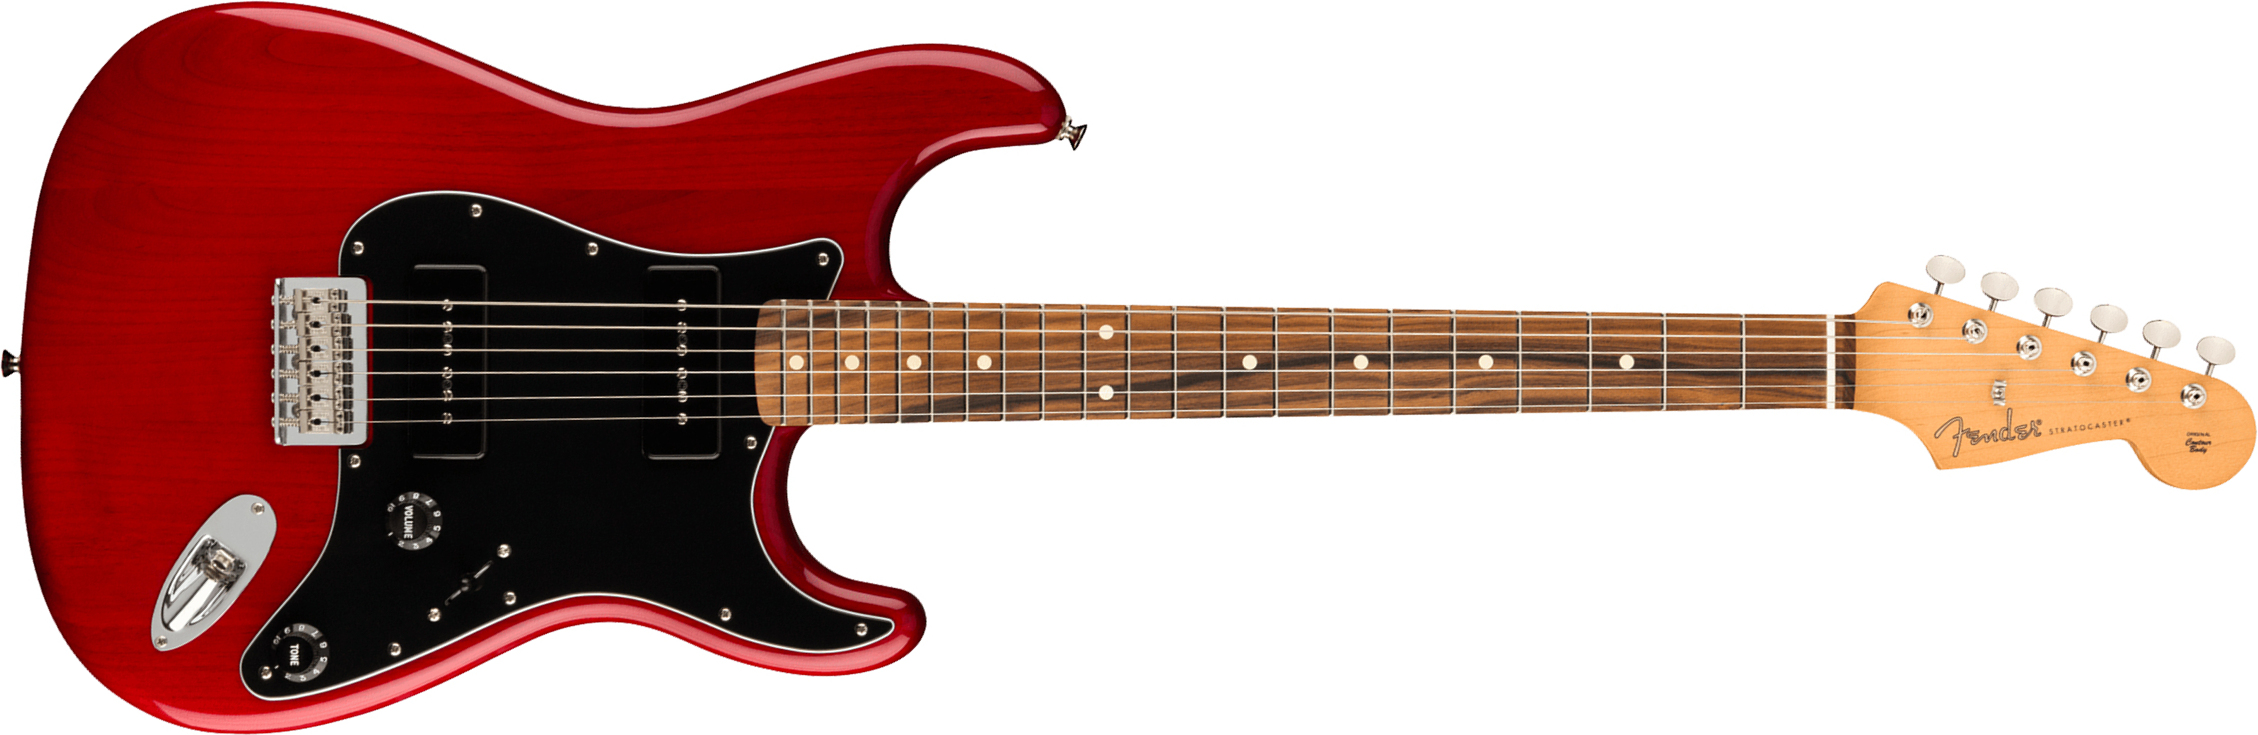 Fender Strat Noventa Mex Ss Ht Pf +housse - Crimson Red Transparent - Str shape electric guitar - Main picture